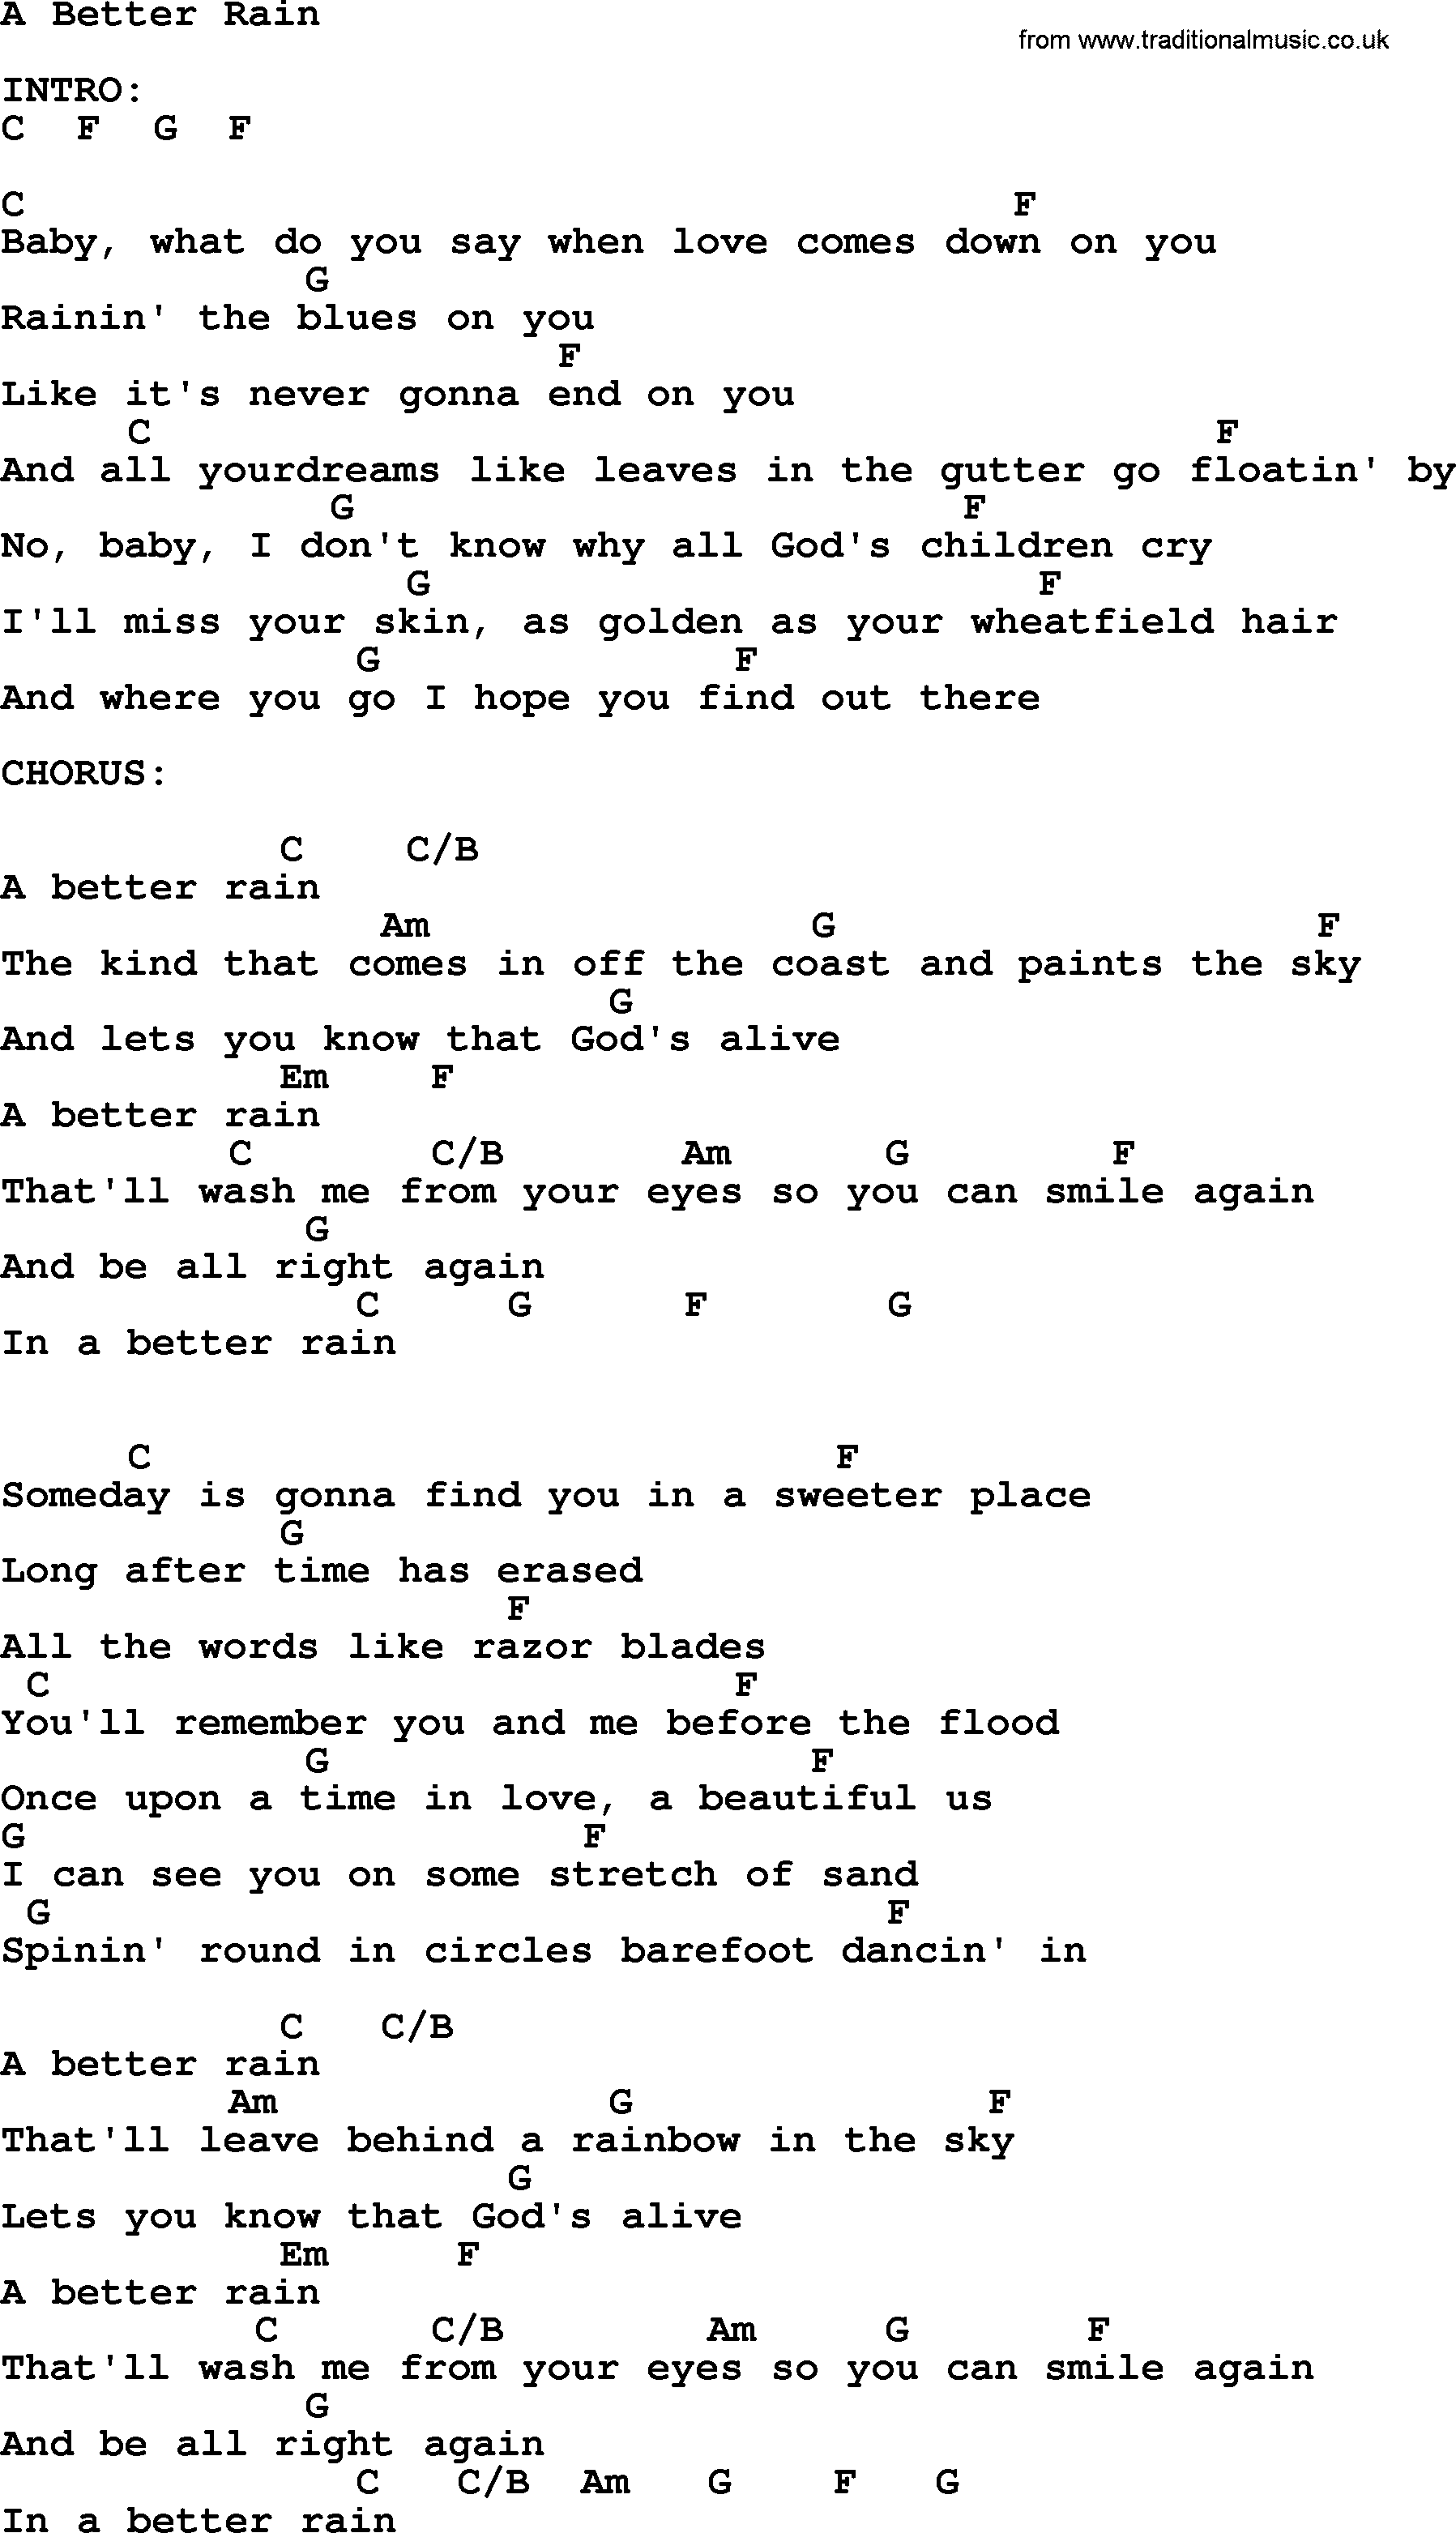 George Strait song: A Better Rain, lyrics and chords